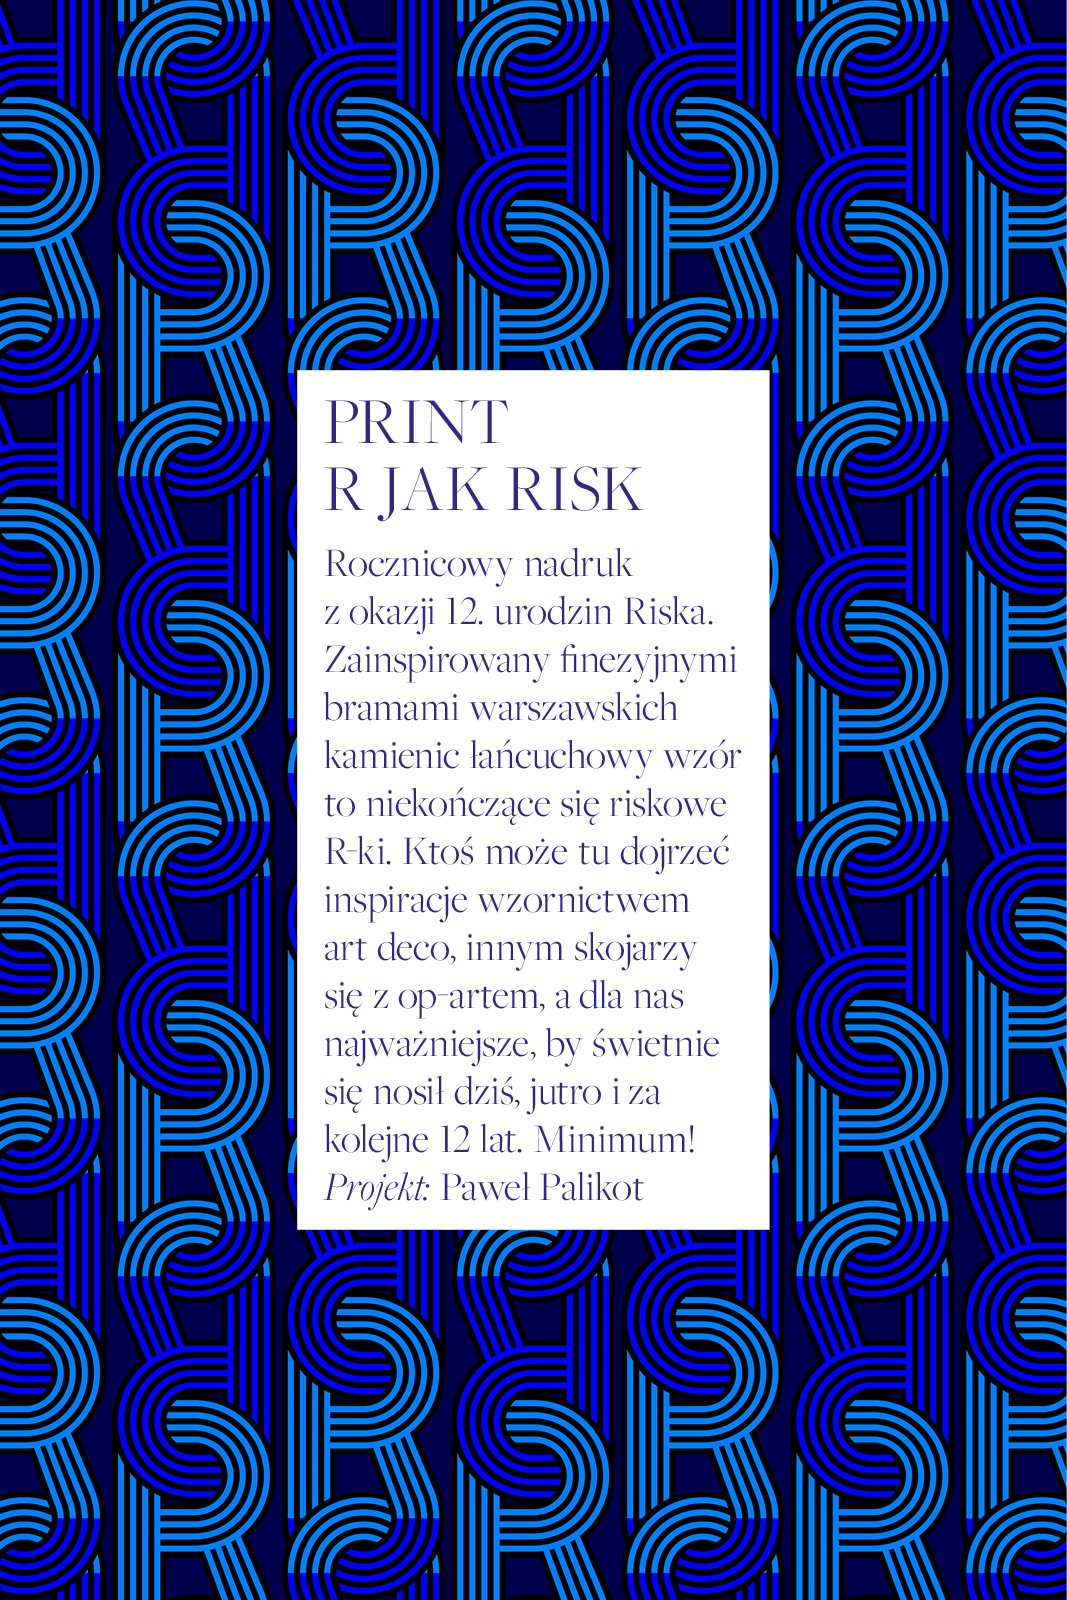 PRIMA BALLERINA print R jak RISK blue & navy